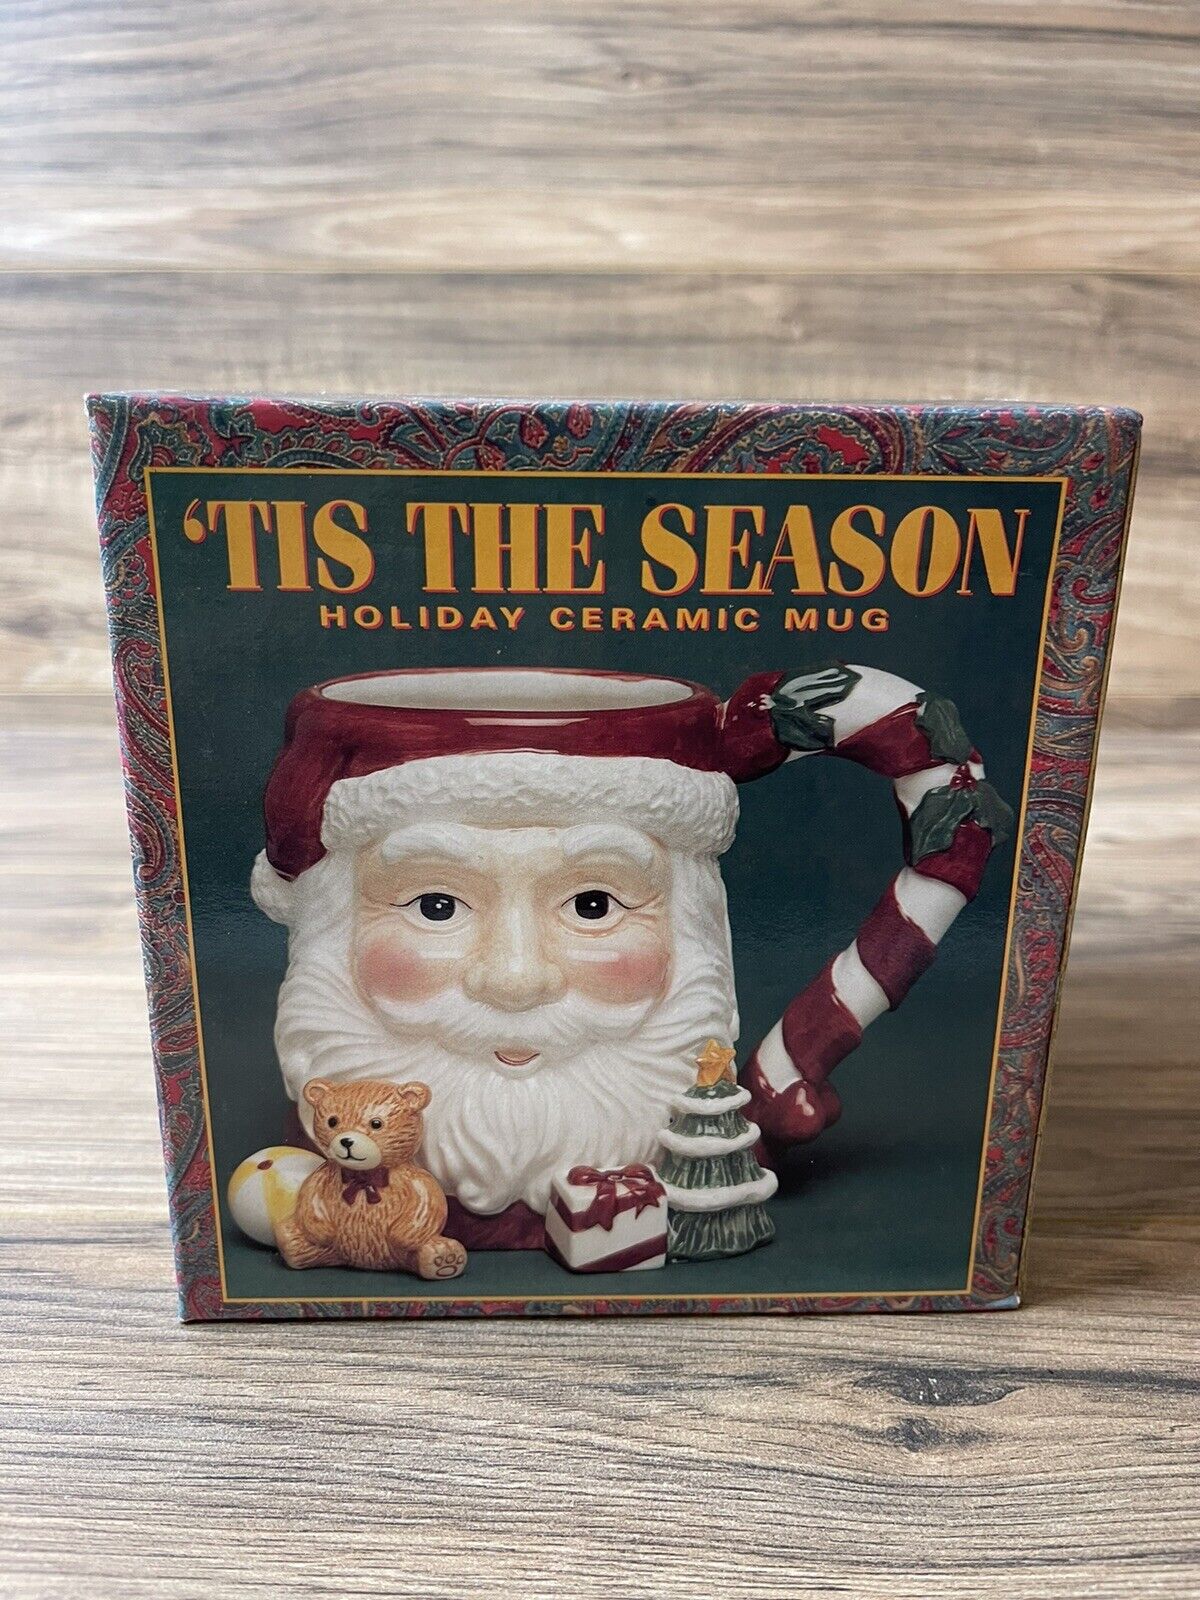 Tis The Season Holiday Ceramic Mug Unopened Box.  Christmas